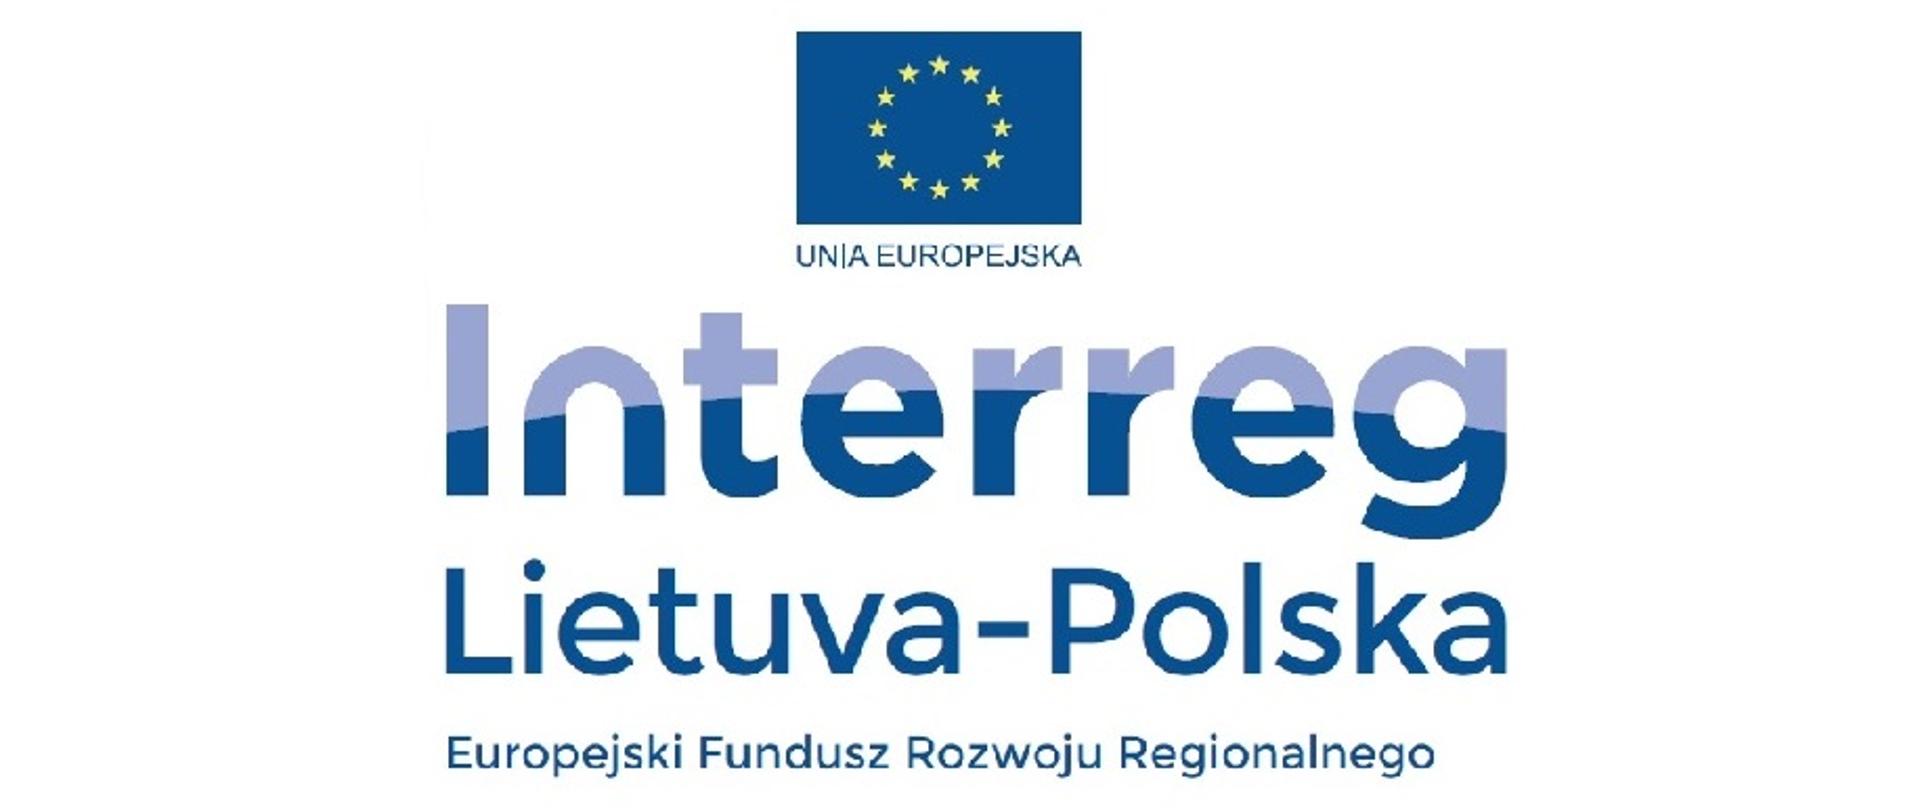 Logo programu EWT Litwa-Polska 2014-2020